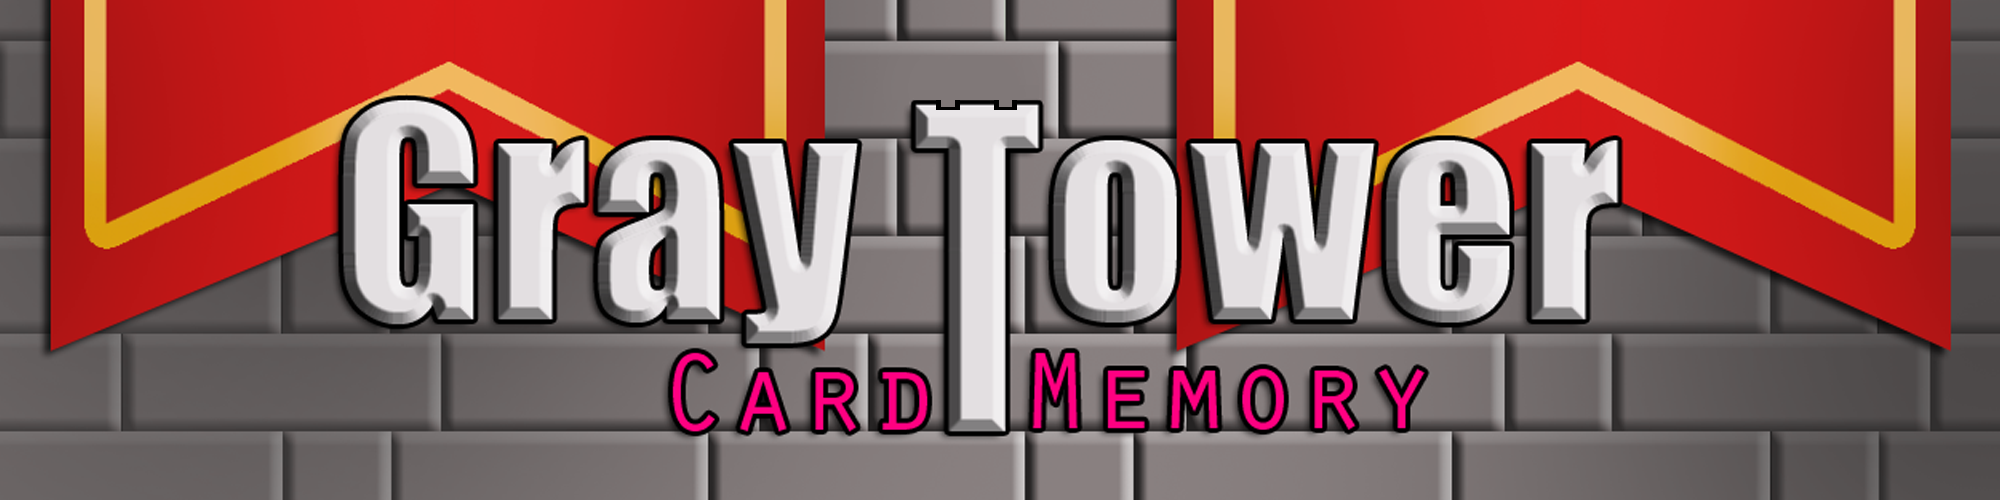 Gray Tower Card Memory